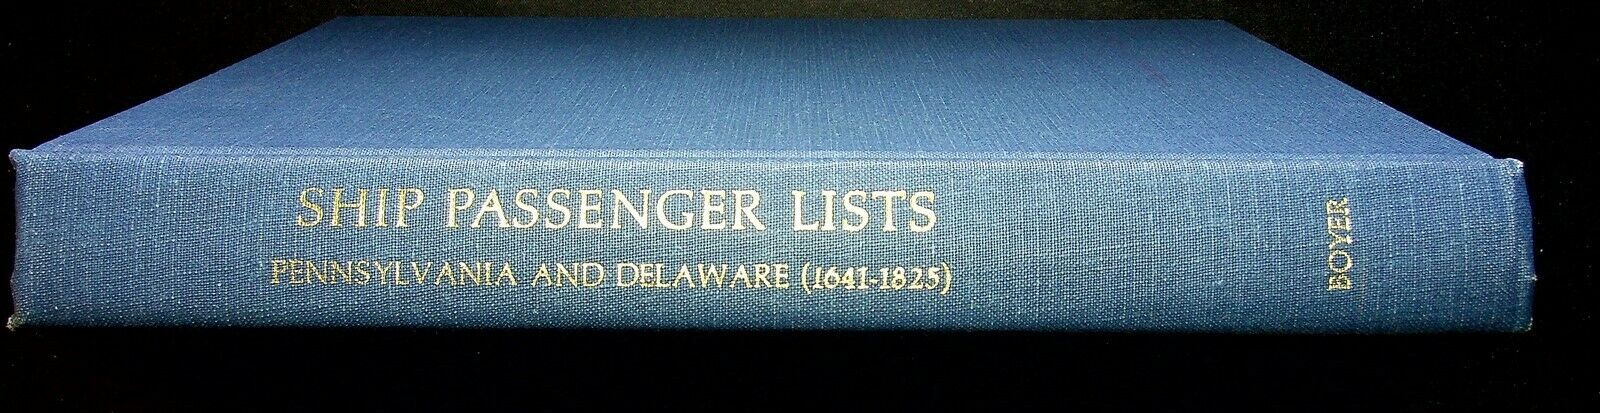 Ship Passenger Lists Pennsylvania & Delaware 1641-1825 Carl Boyer Book 3rd